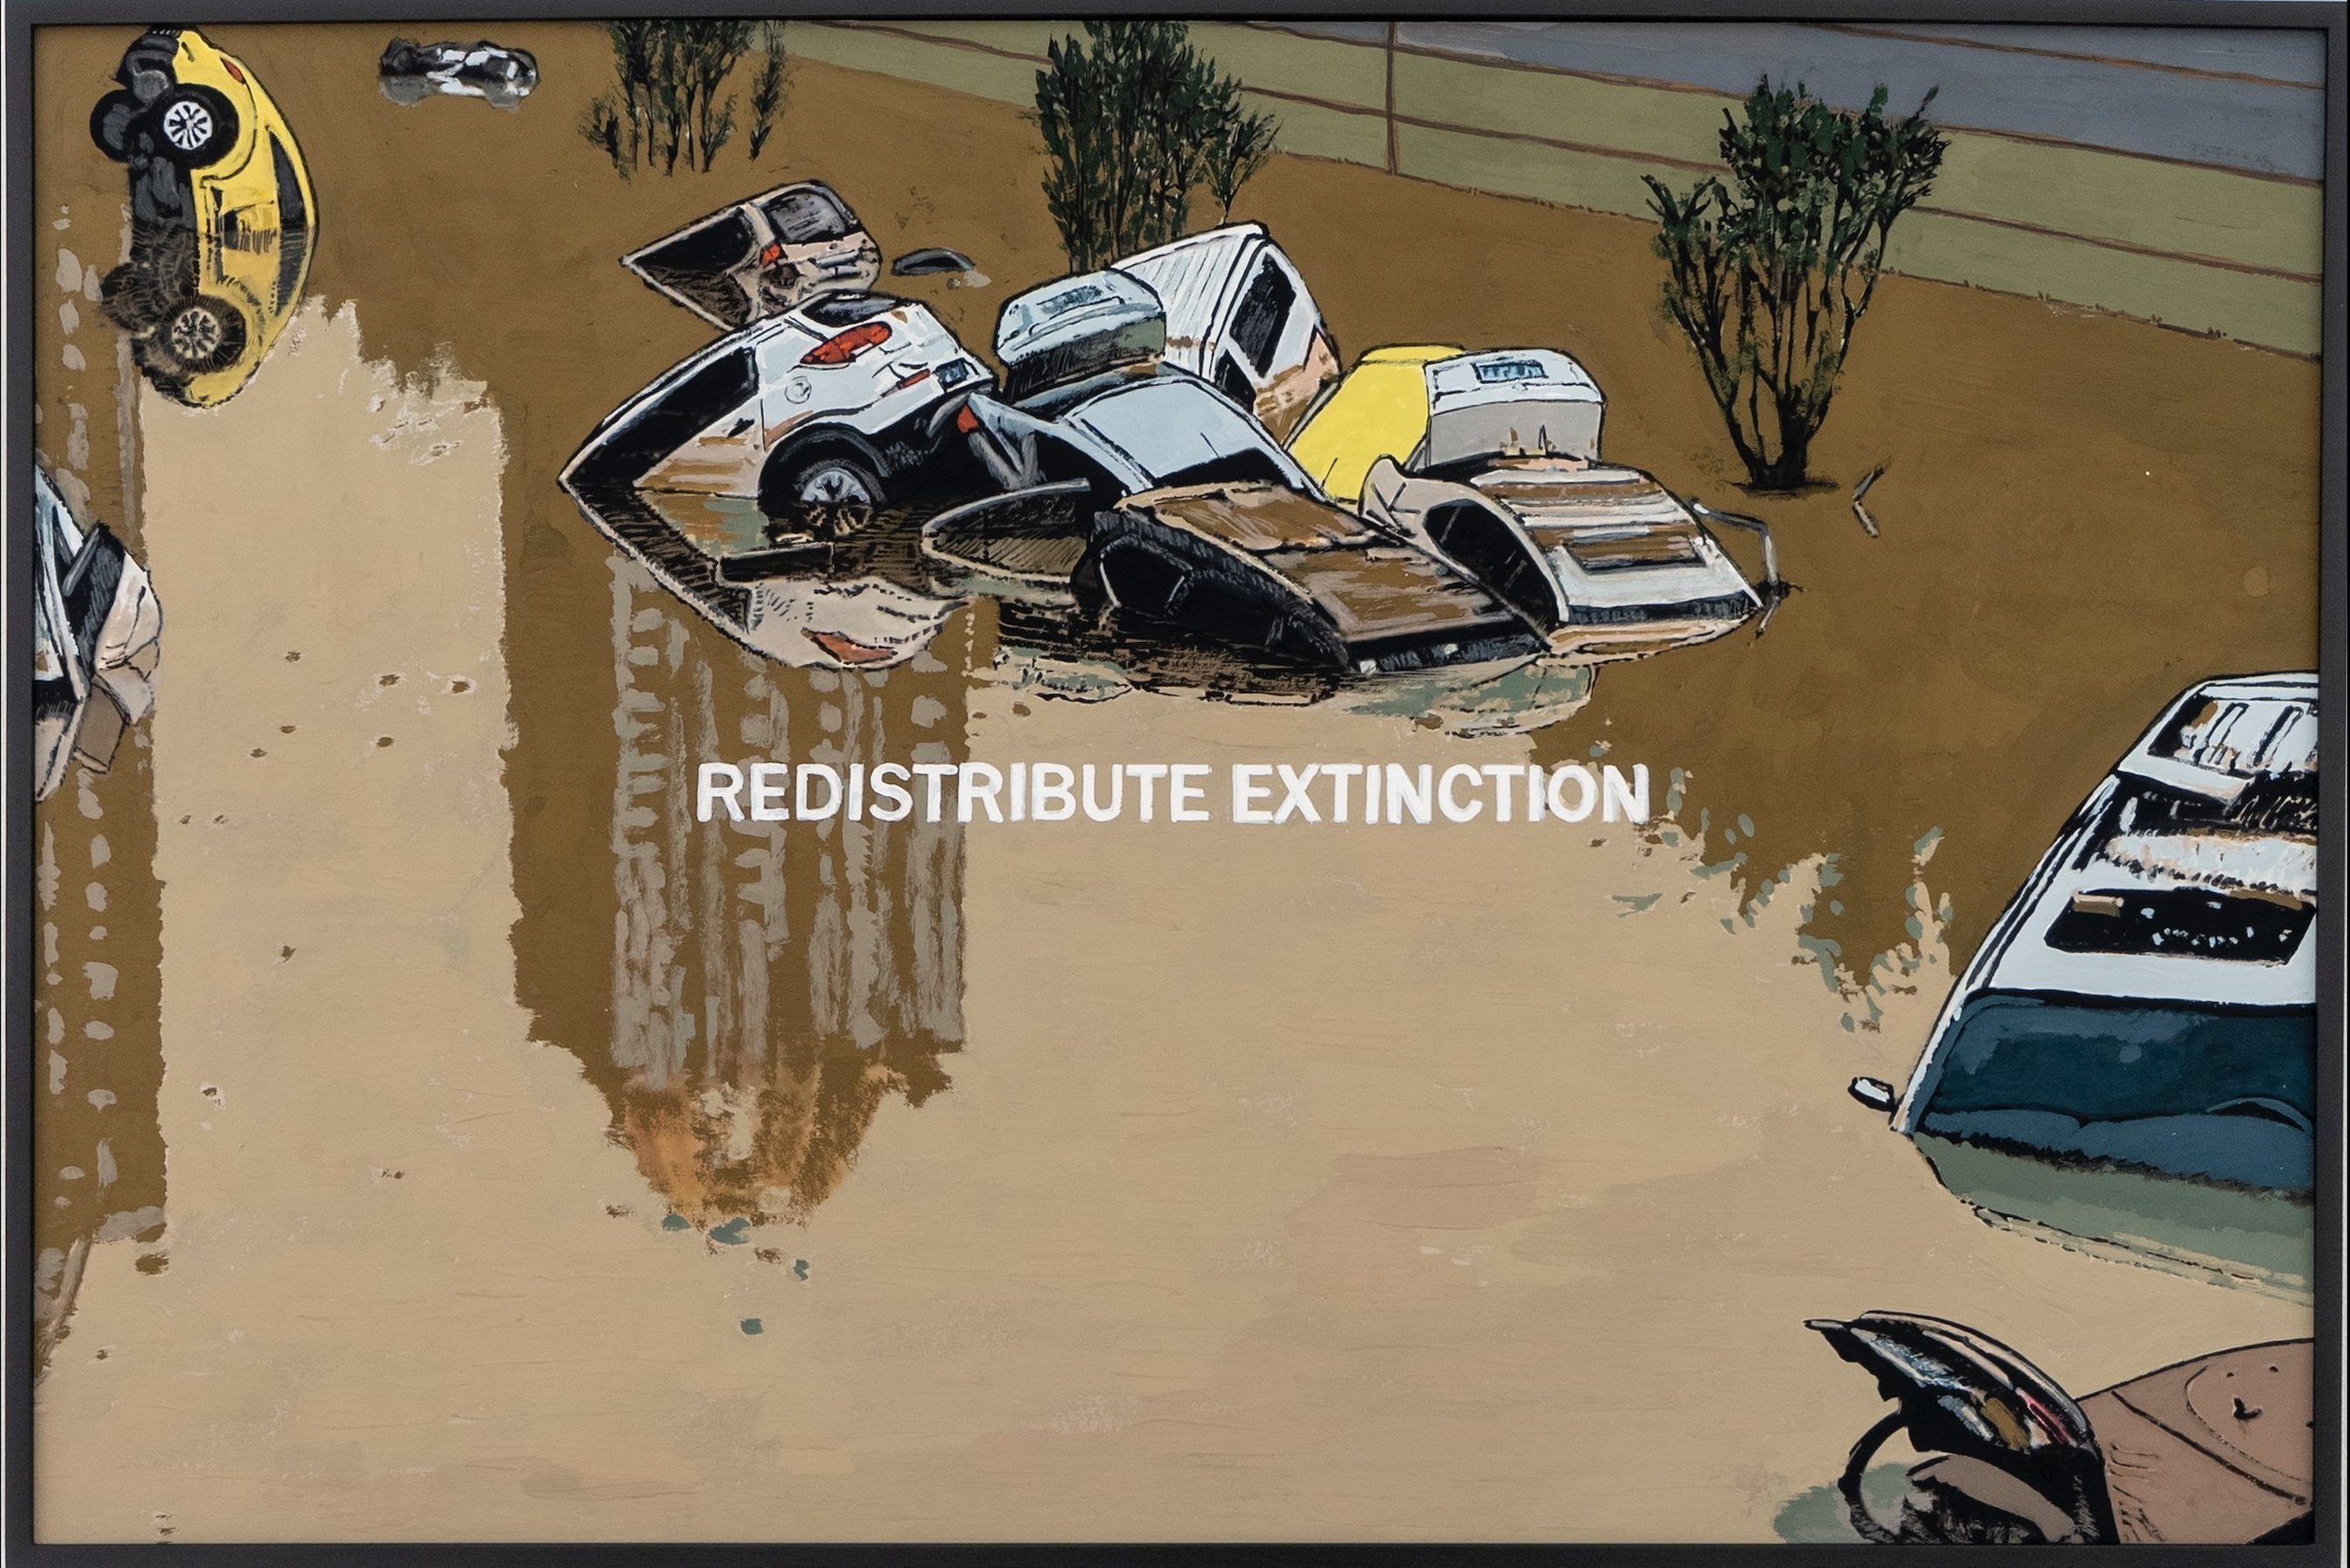 Redistribute Extinction #5